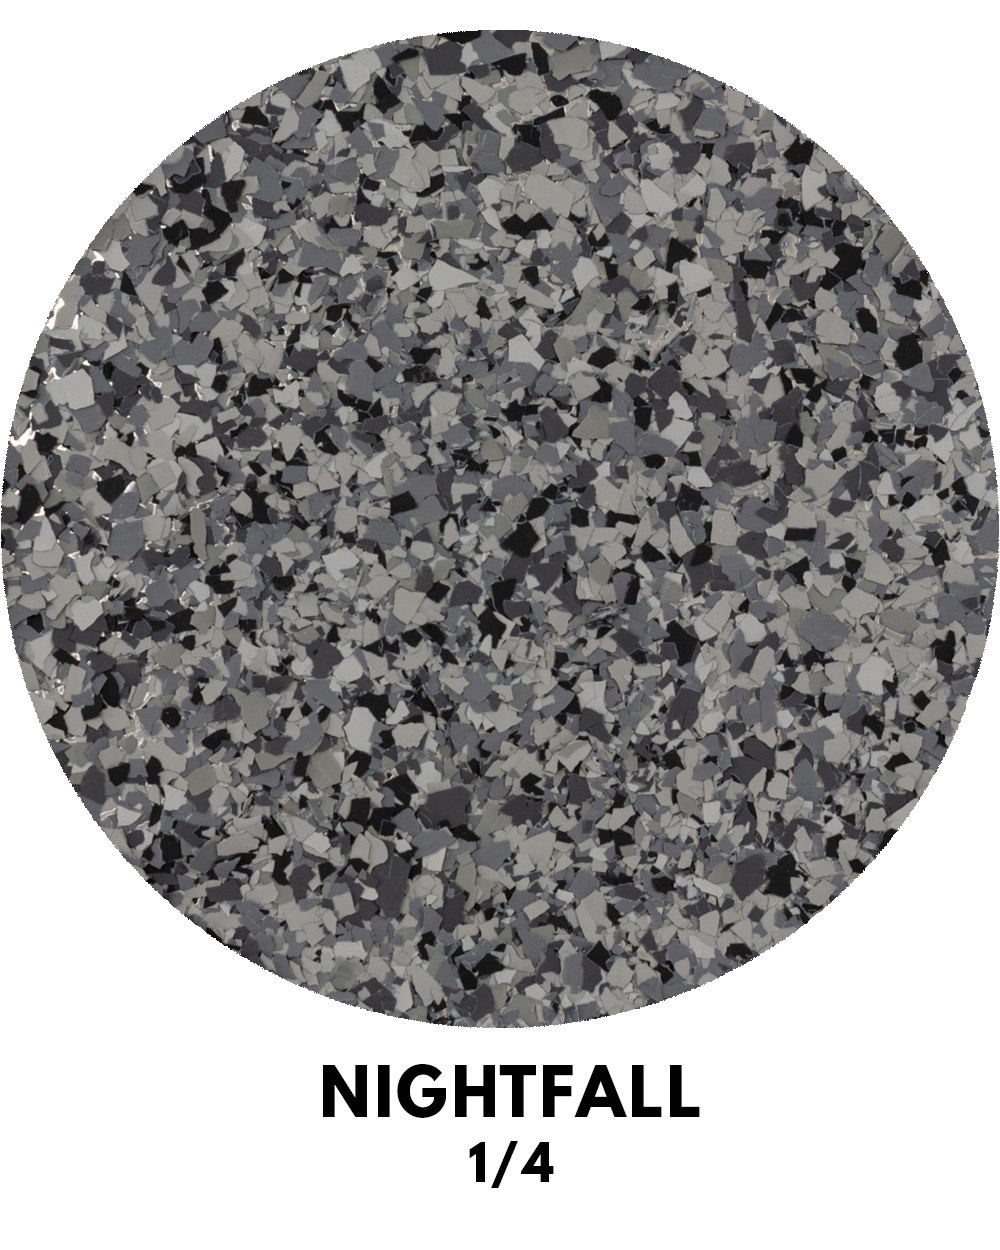 nightfall flooring type